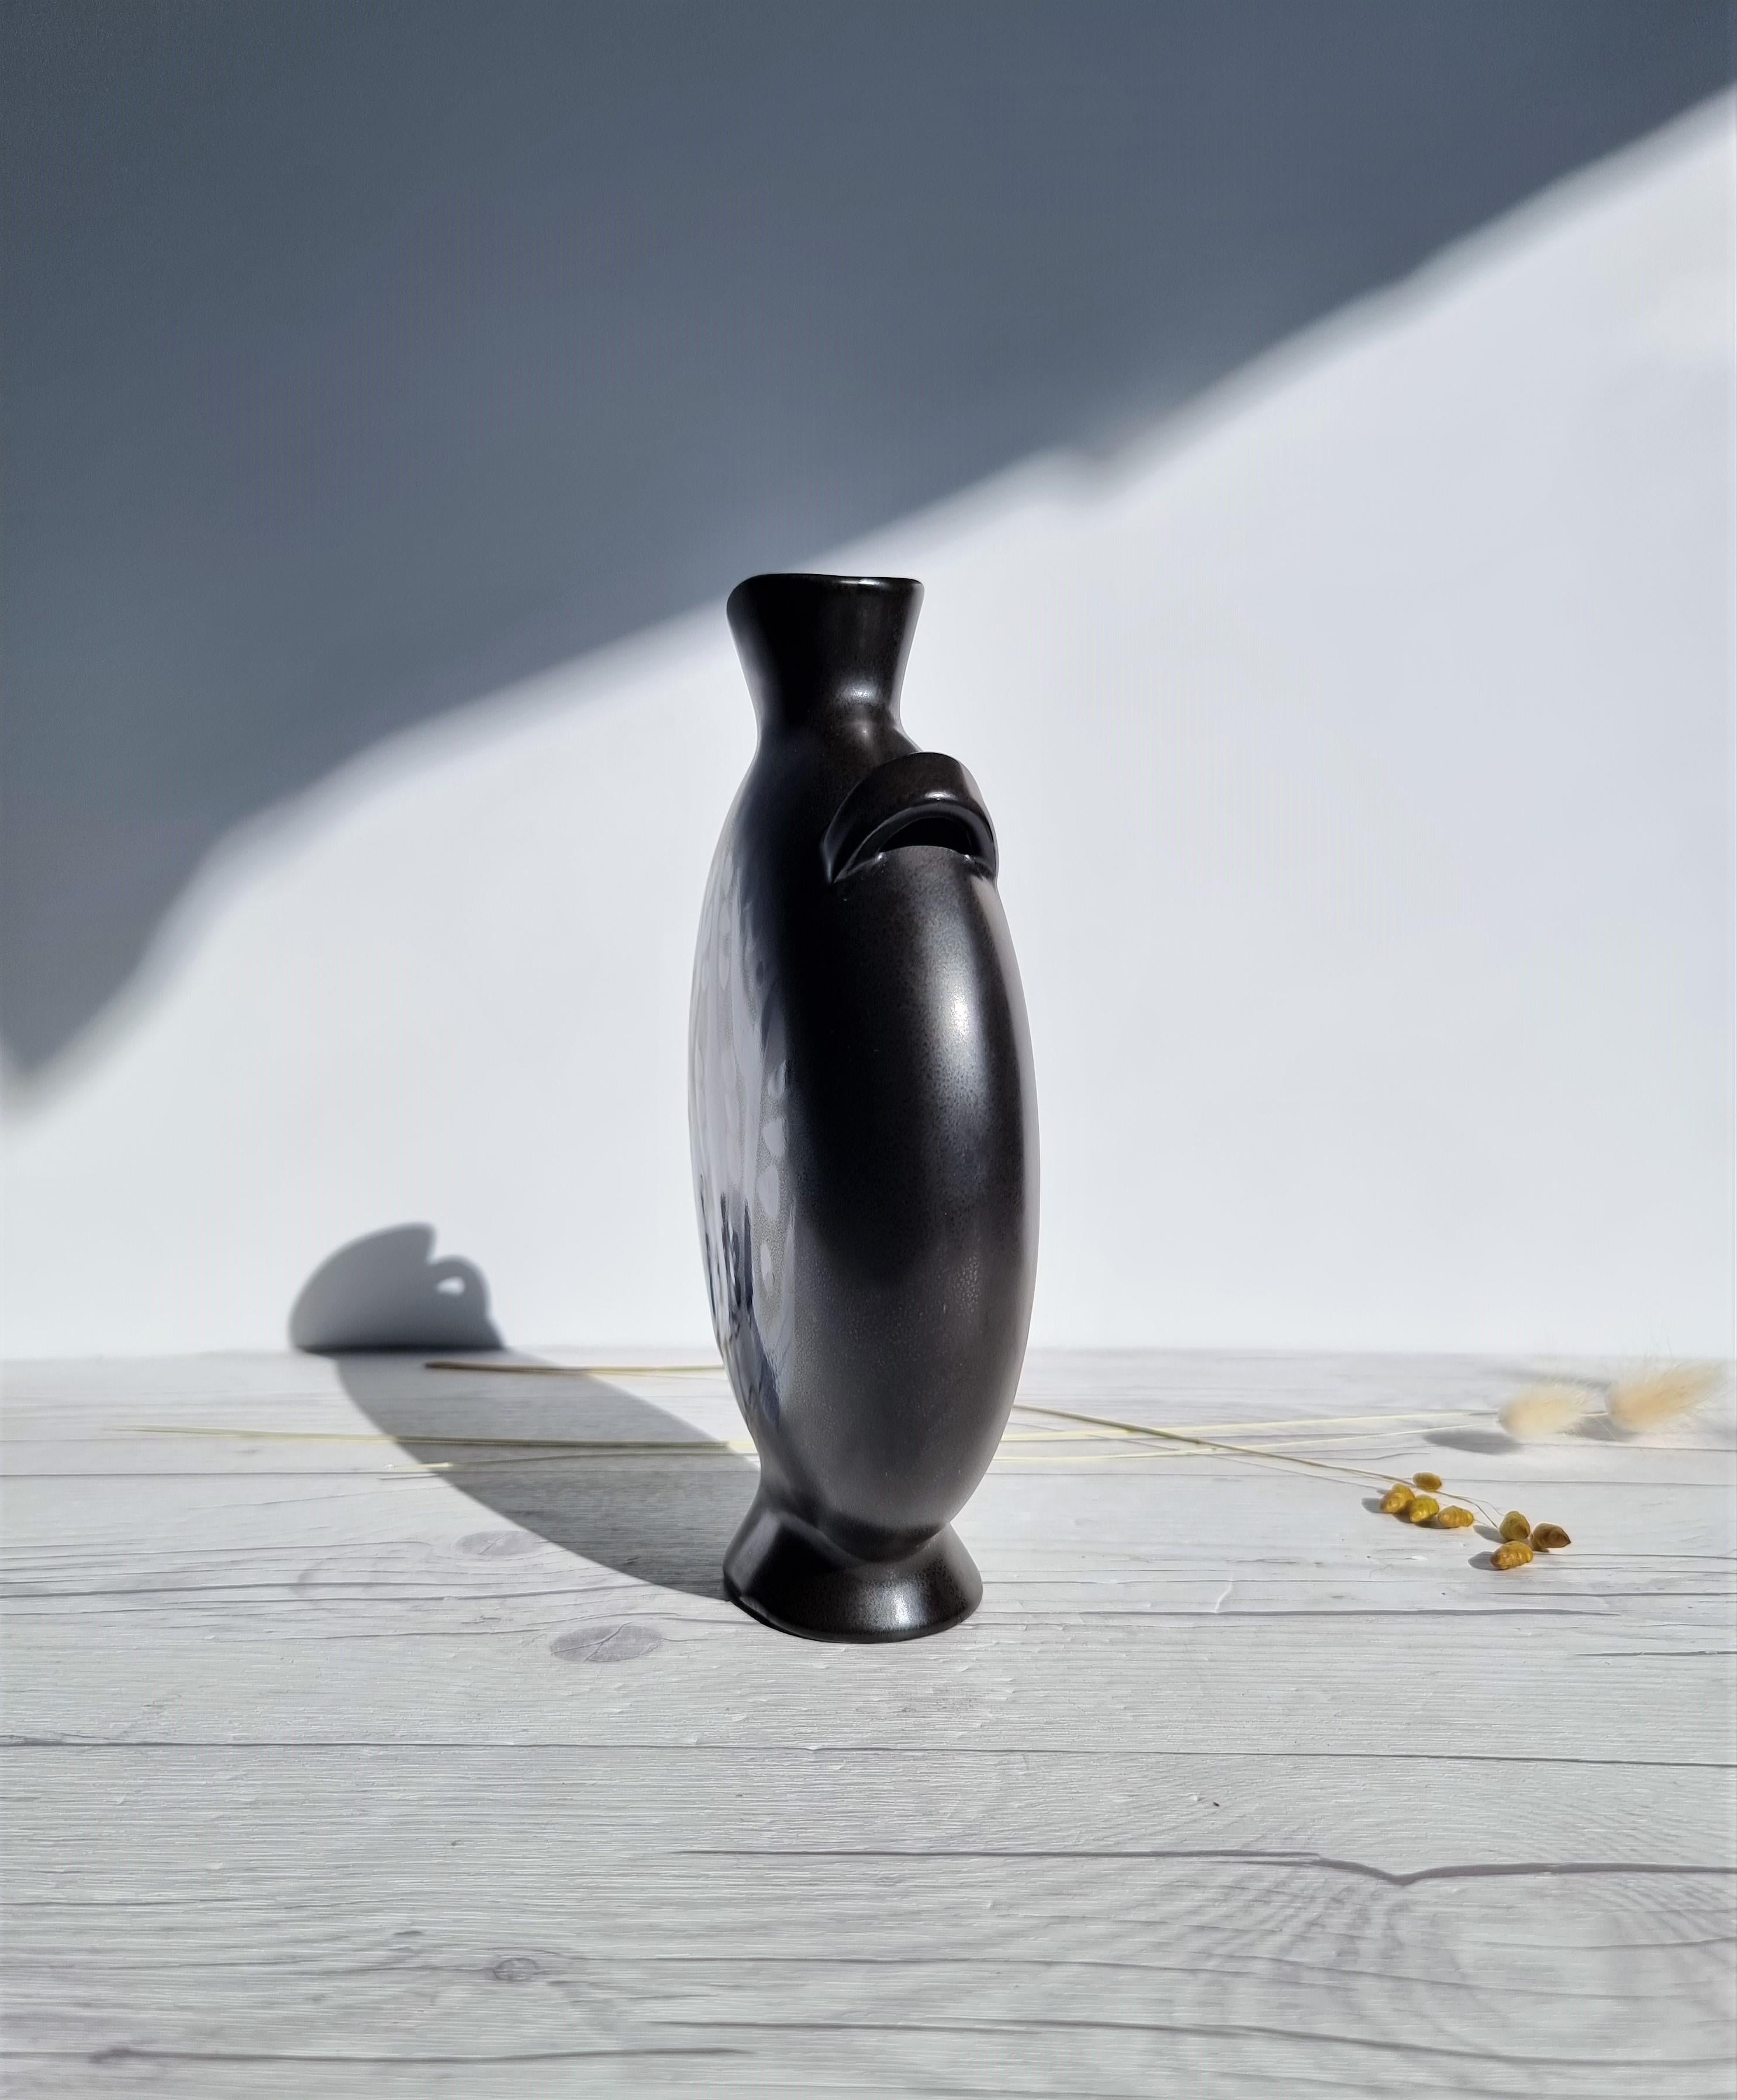 Swedish Lillemor Mannerheim for Gefle Keramik, Singoalla Series, Moon Flask Vase